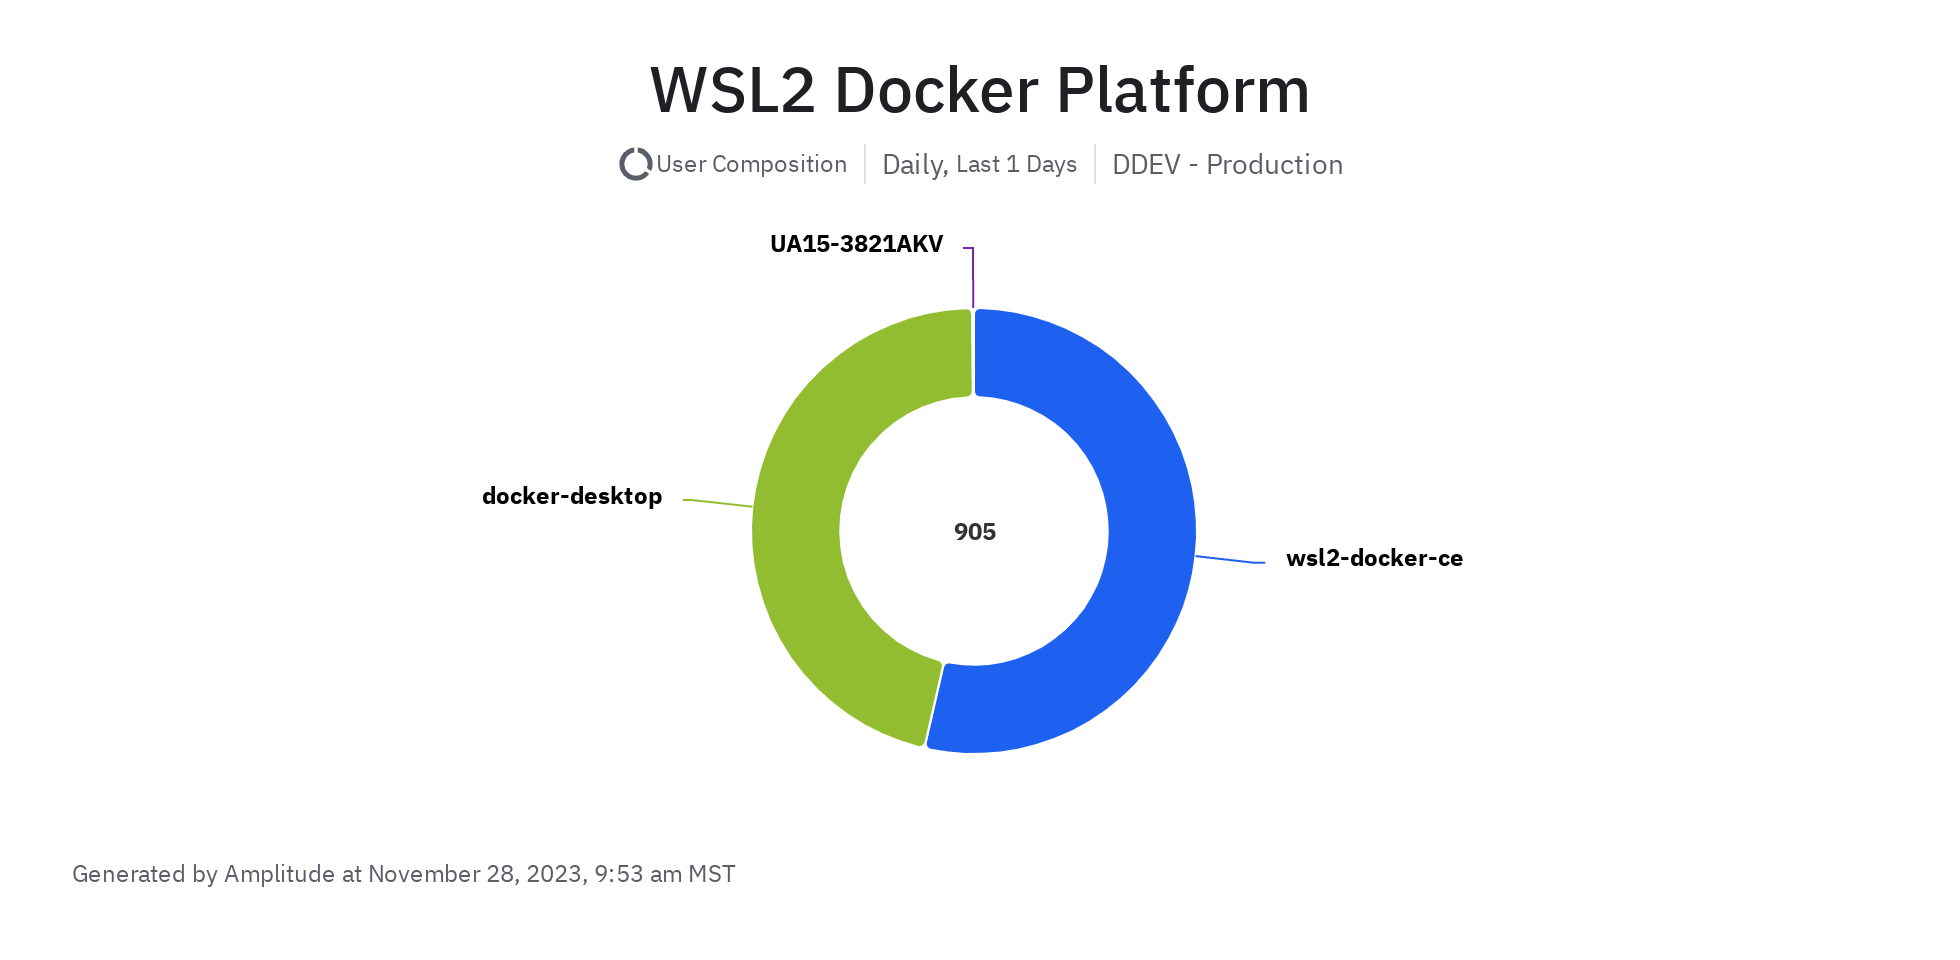 Donut chart depicting the last day of WSL2 Docker Platform usage, with slightly more than half using WSL2 and slightly less than half using Docker Desktop